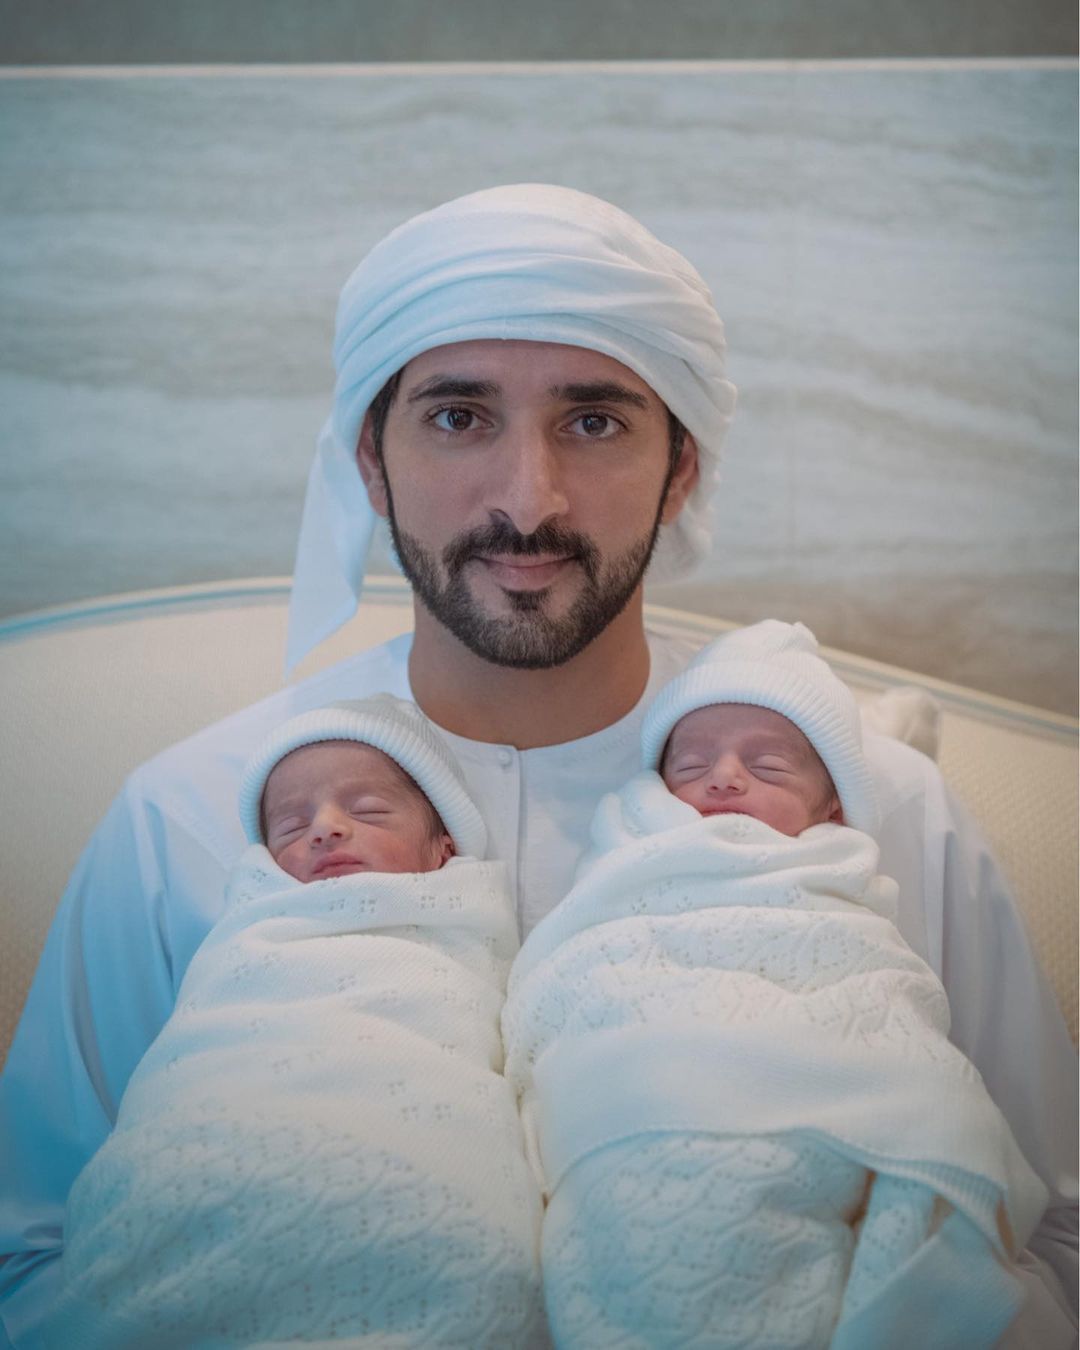 His Highness Sheikh Hamdan bin Mohammed bin Rashid Al Maktoum Shares A